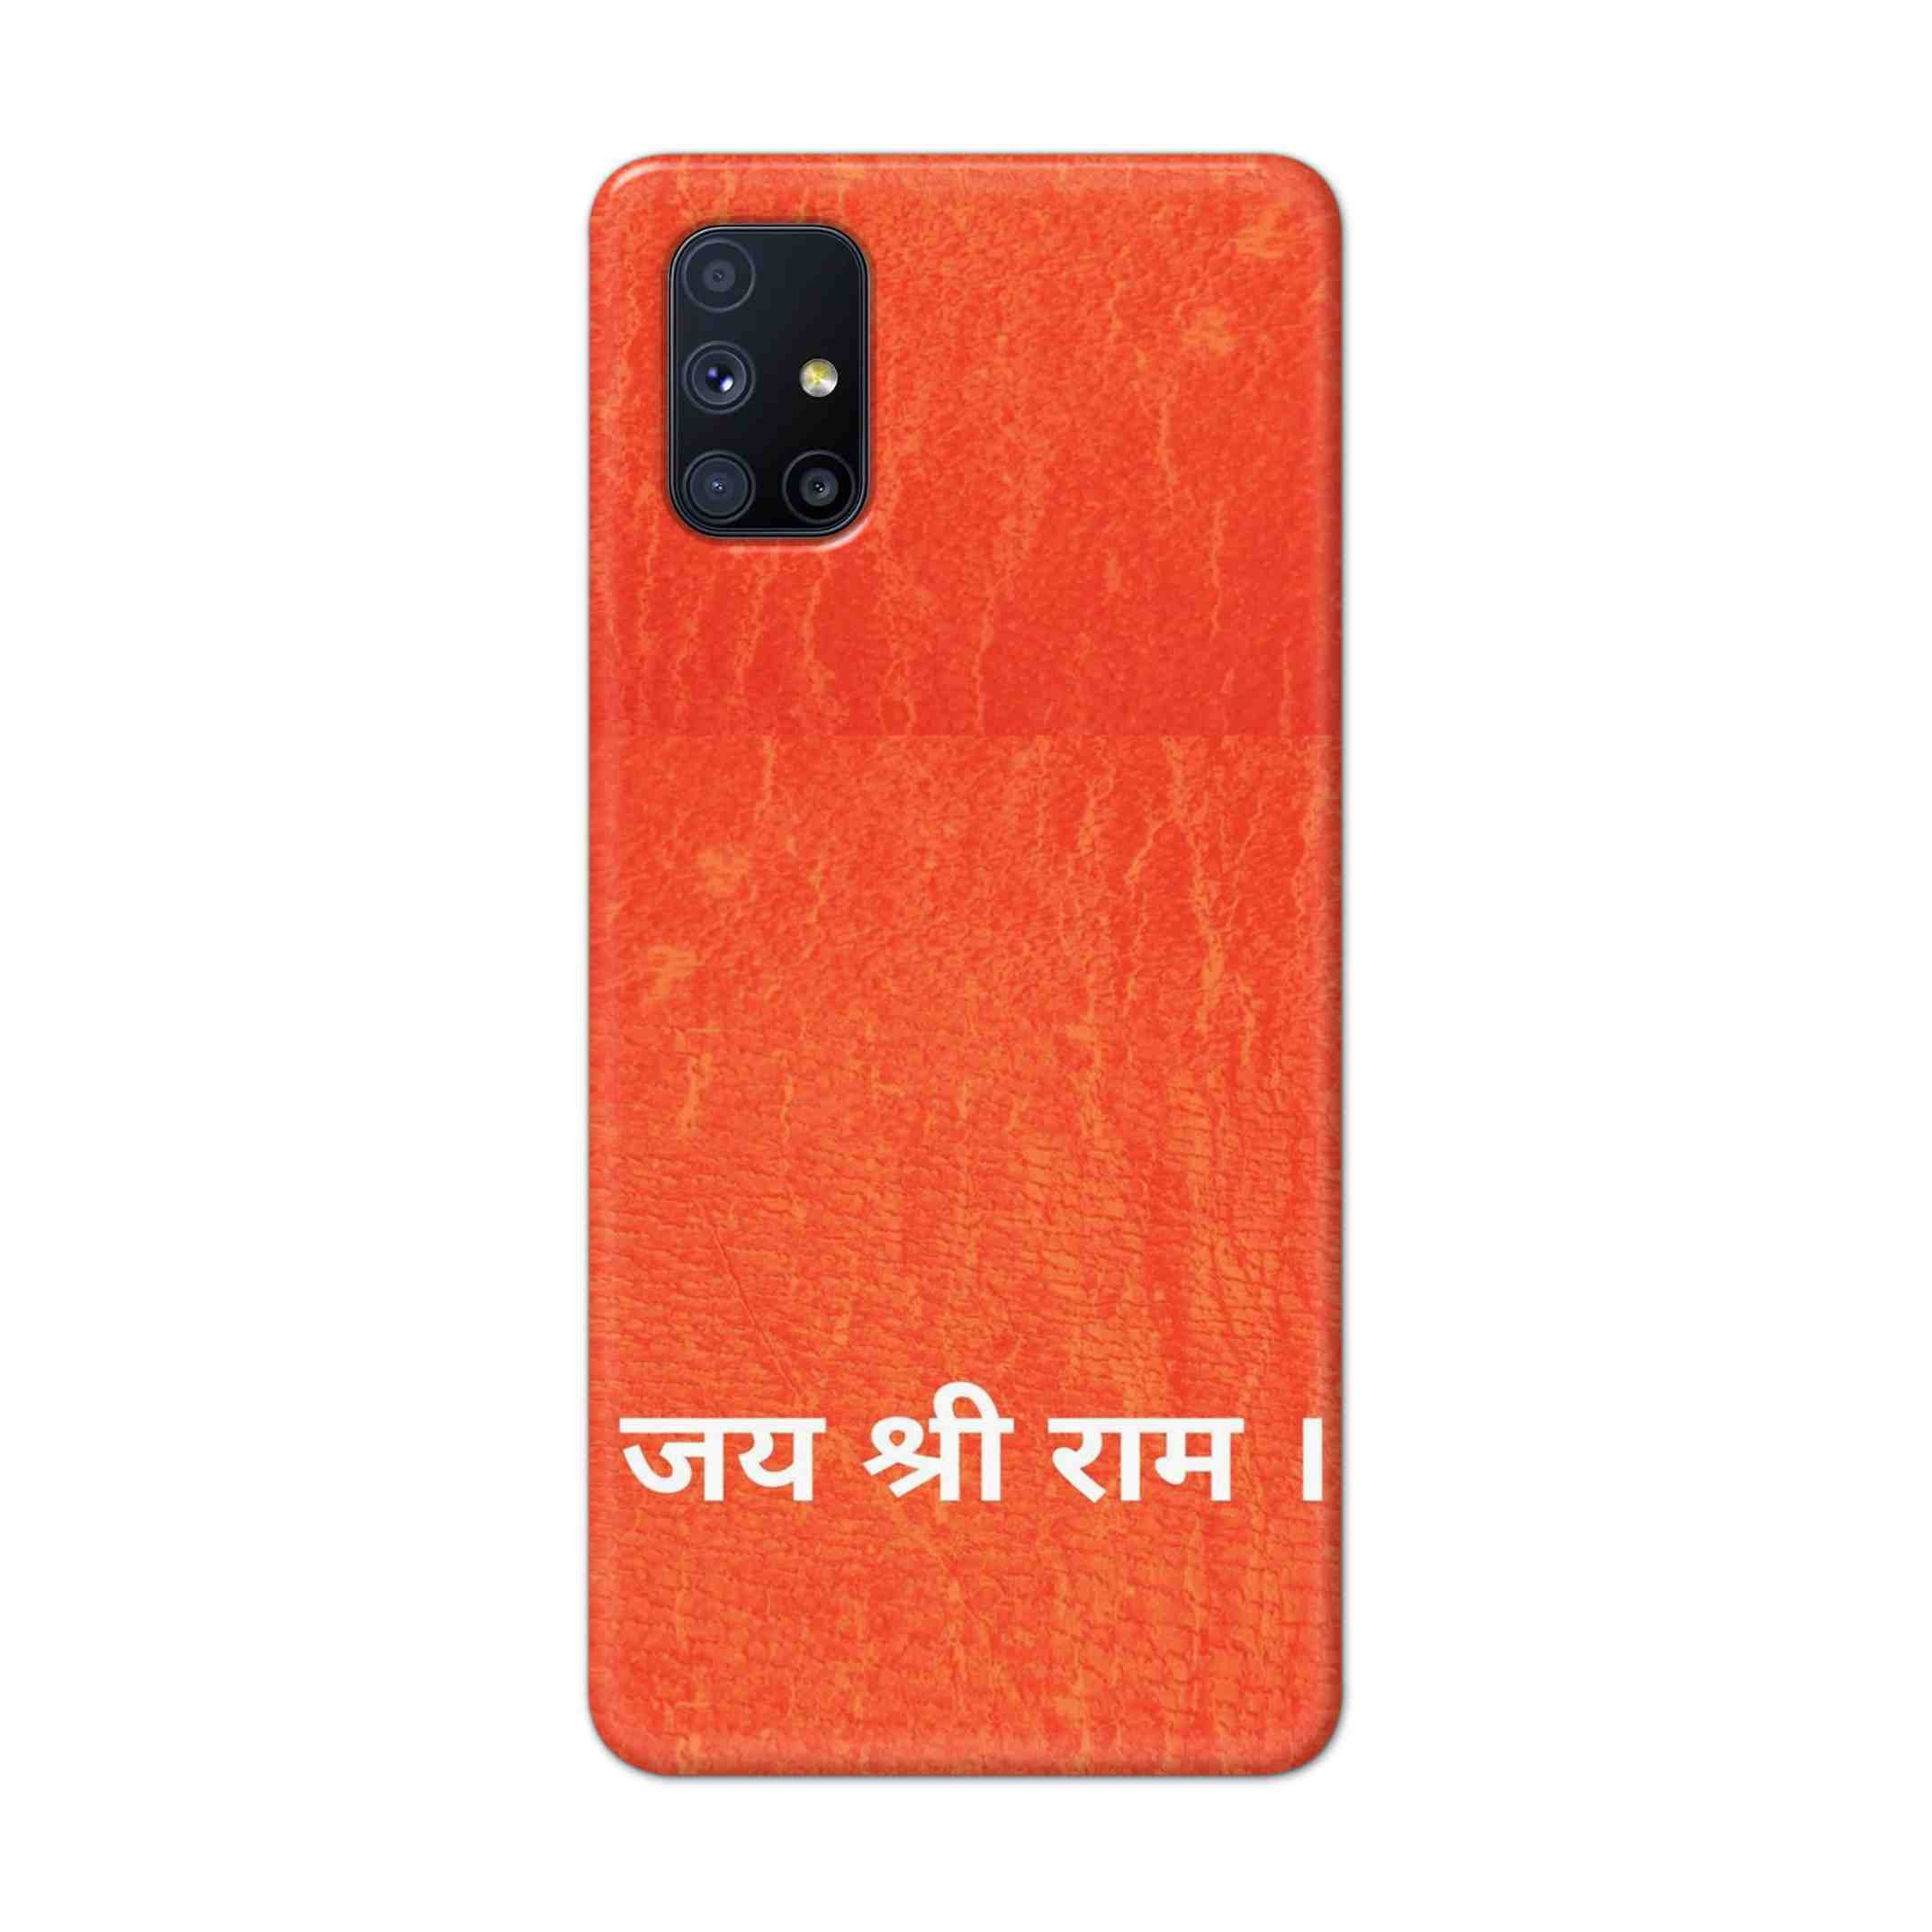 Buy Jai Shree Ram Hard Back Mobile Phone Case Cover For Samsung Galaxy M51 Online